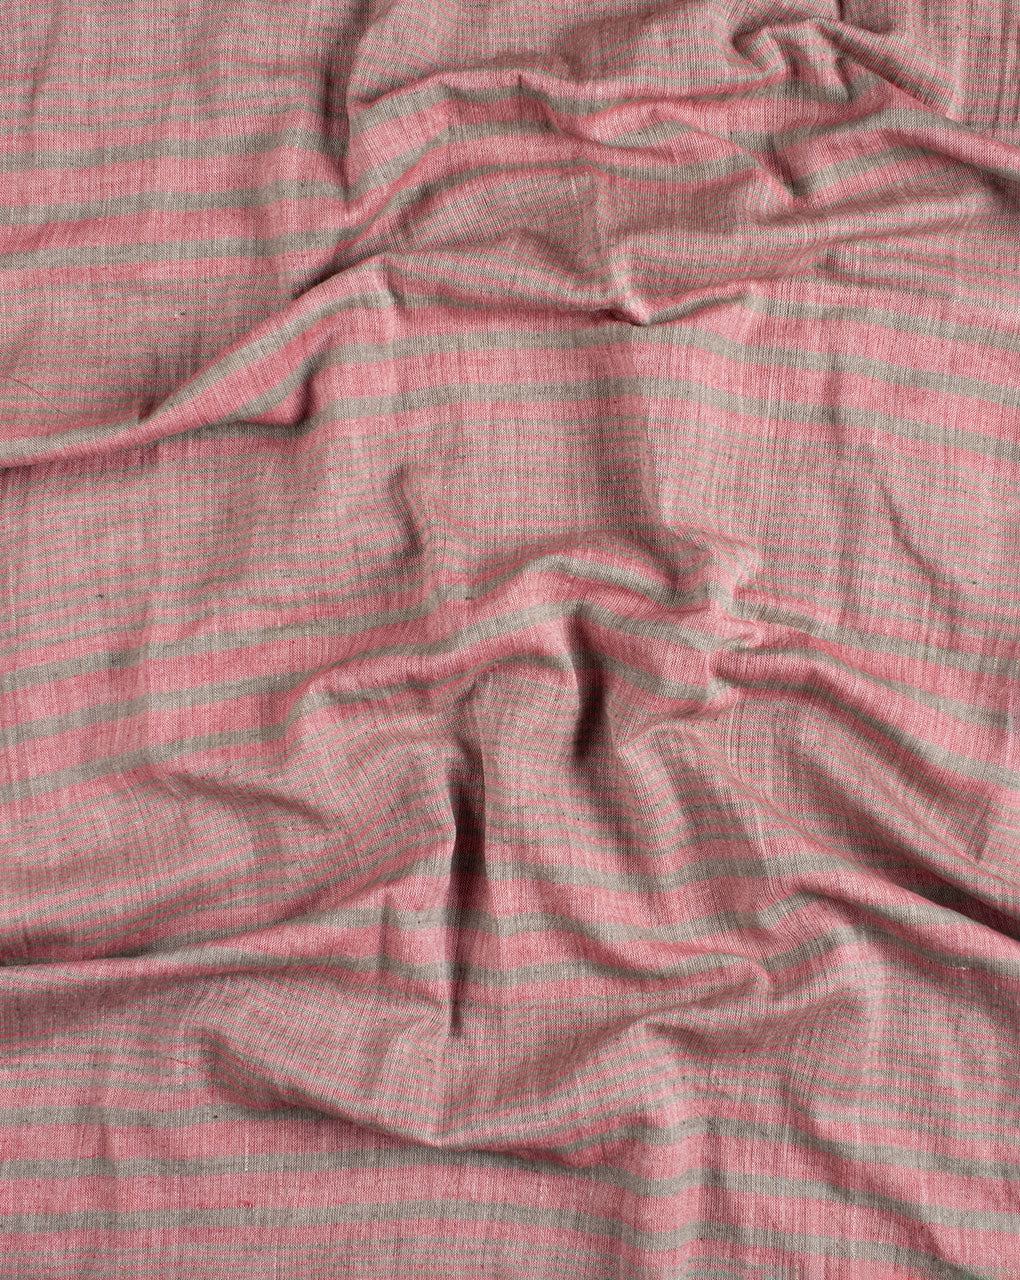 Pink Stripes Woven Bhagalpuri Cotton Stole - Fabriclore.com